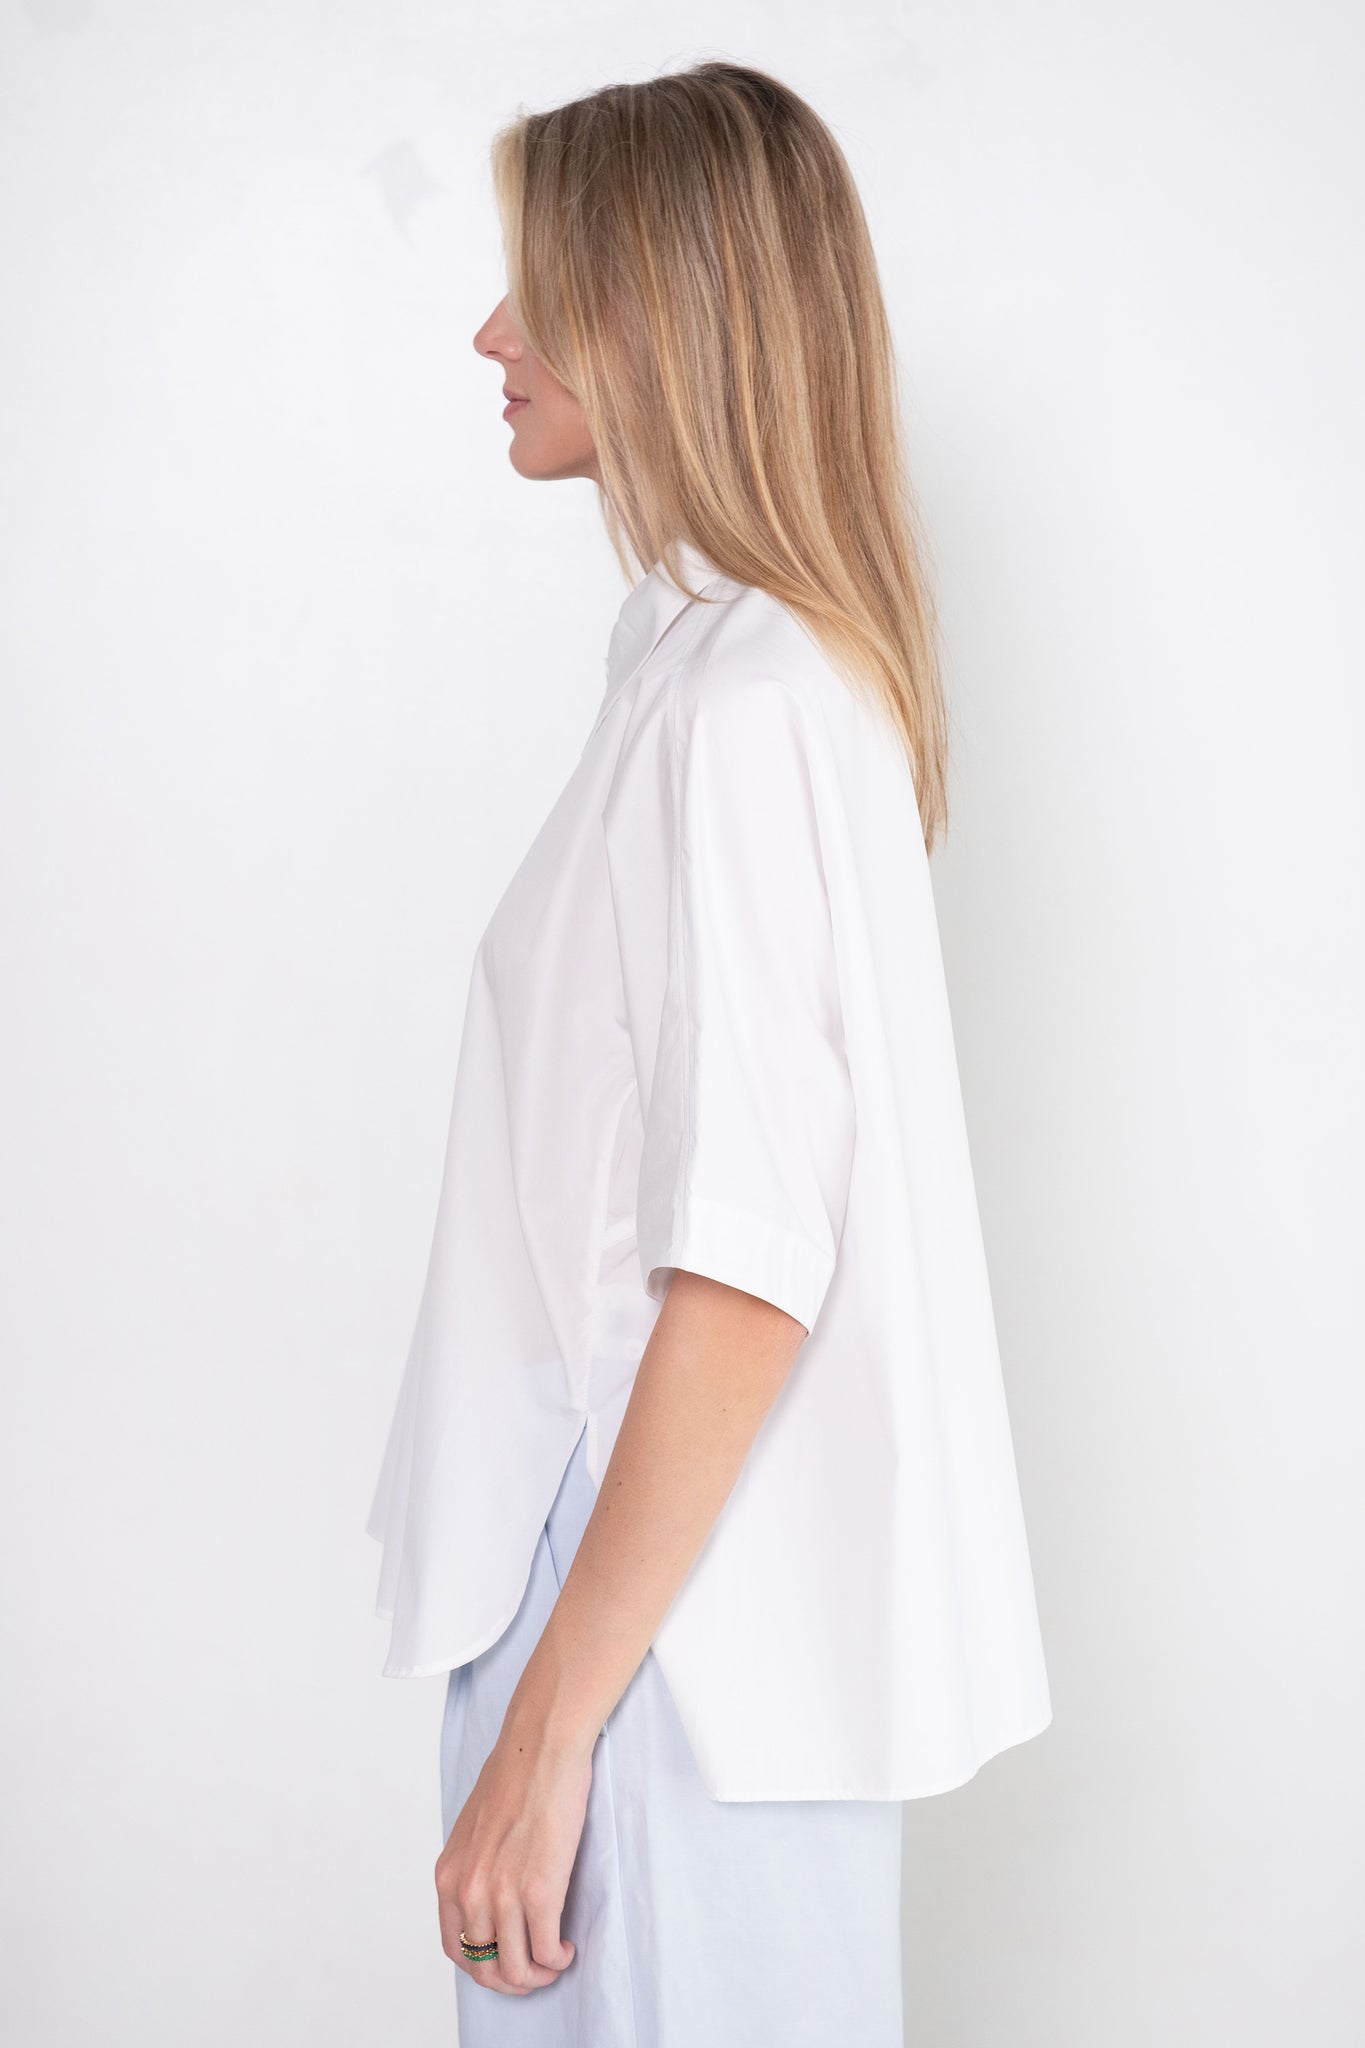 Veronique Leroy - Short-Sleeve Shirt, White